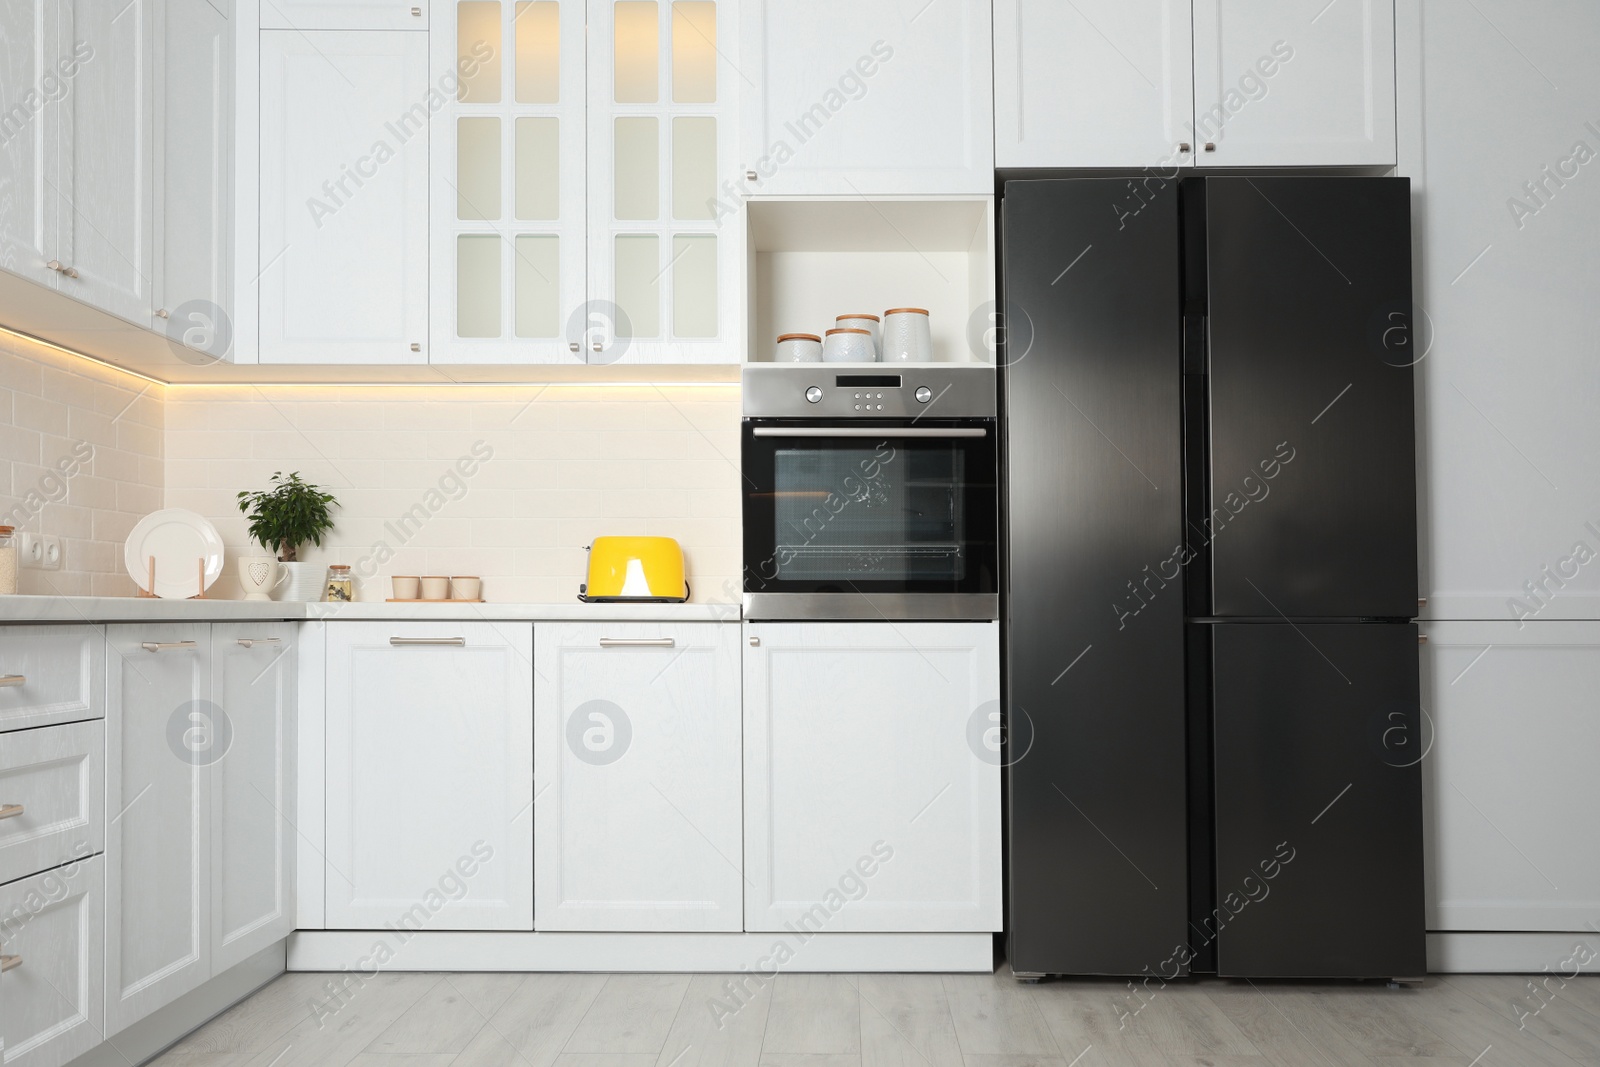 Photo of Stylish kitchen interior with modern steel refrigerator